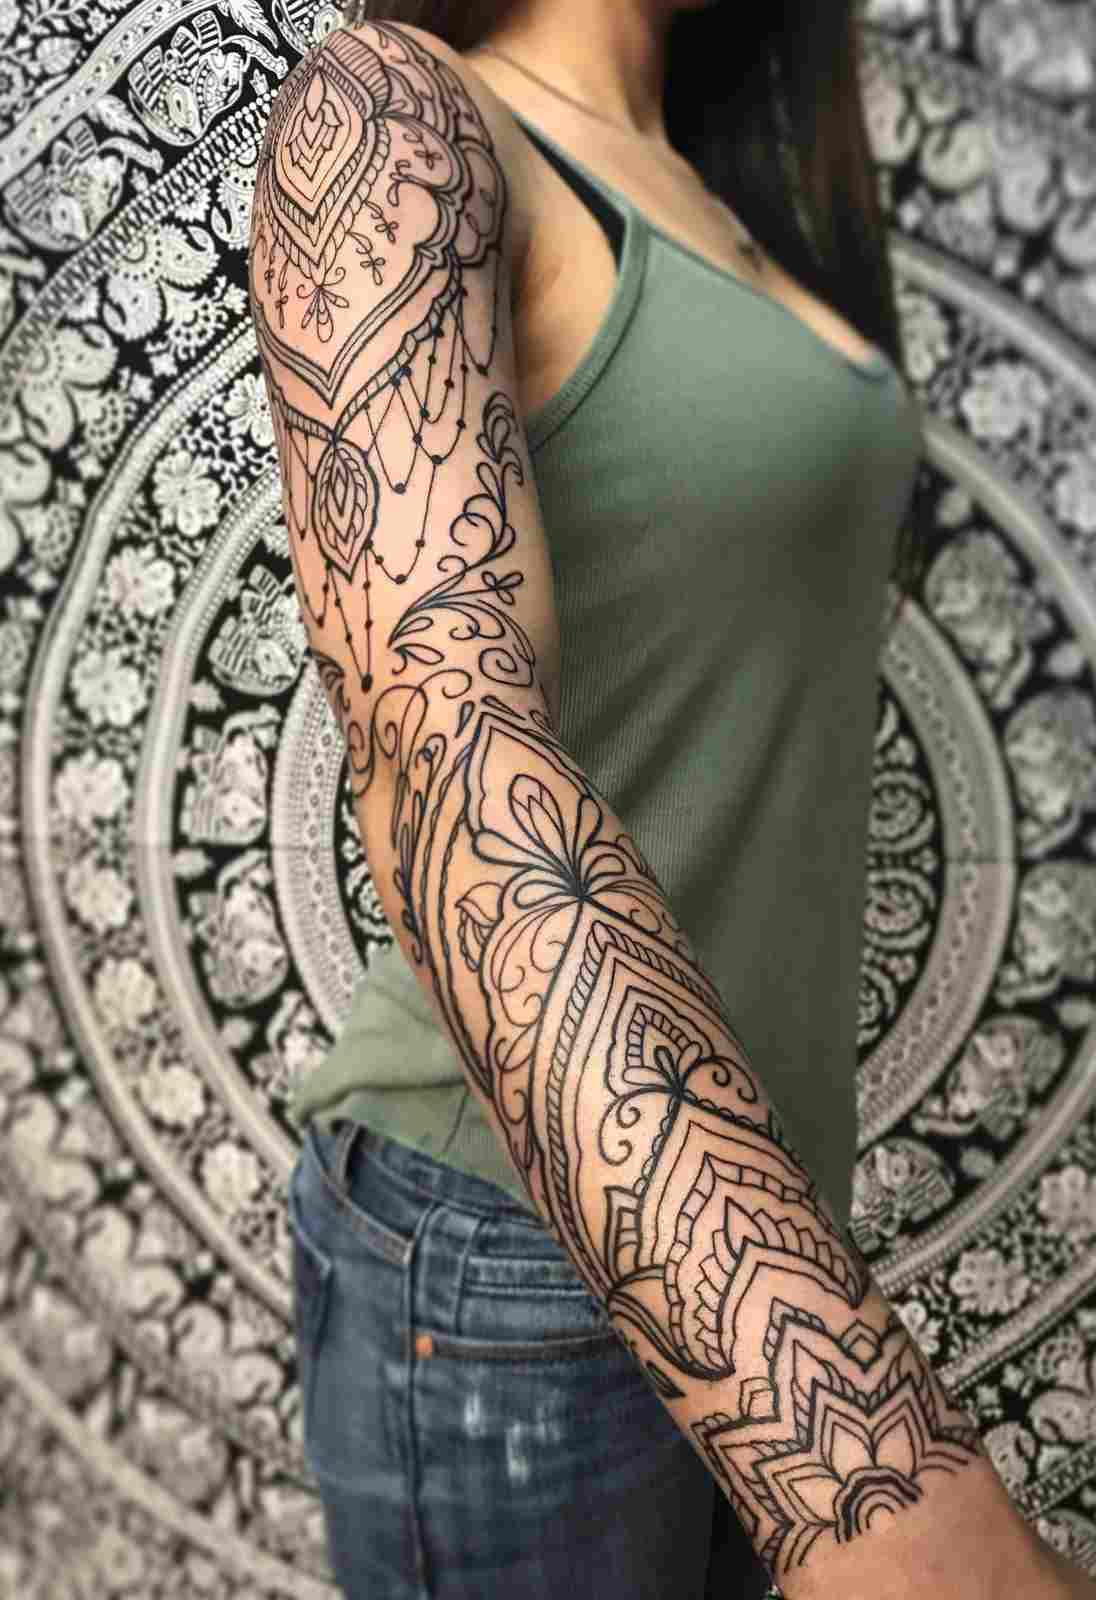 Tattoos frau arm vorlagen